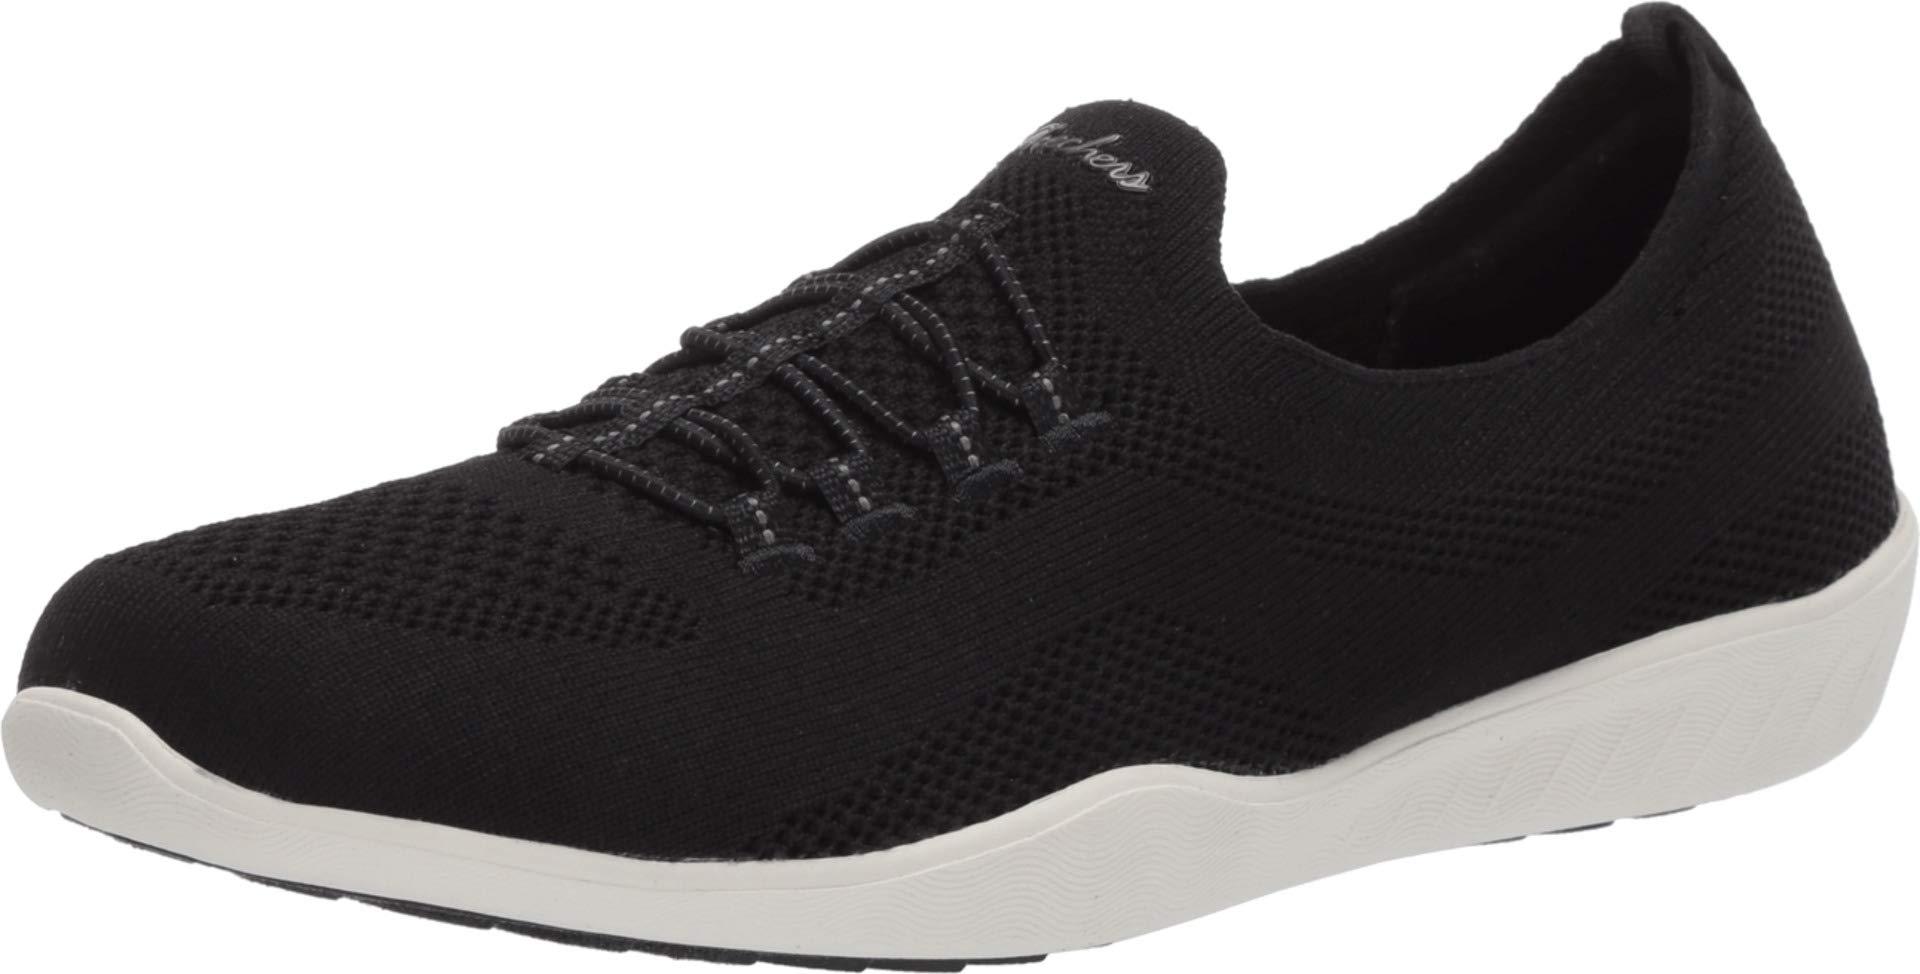 Skechers Newbury St. -every Angle Sneaker in Black/White (Black) - Save ...